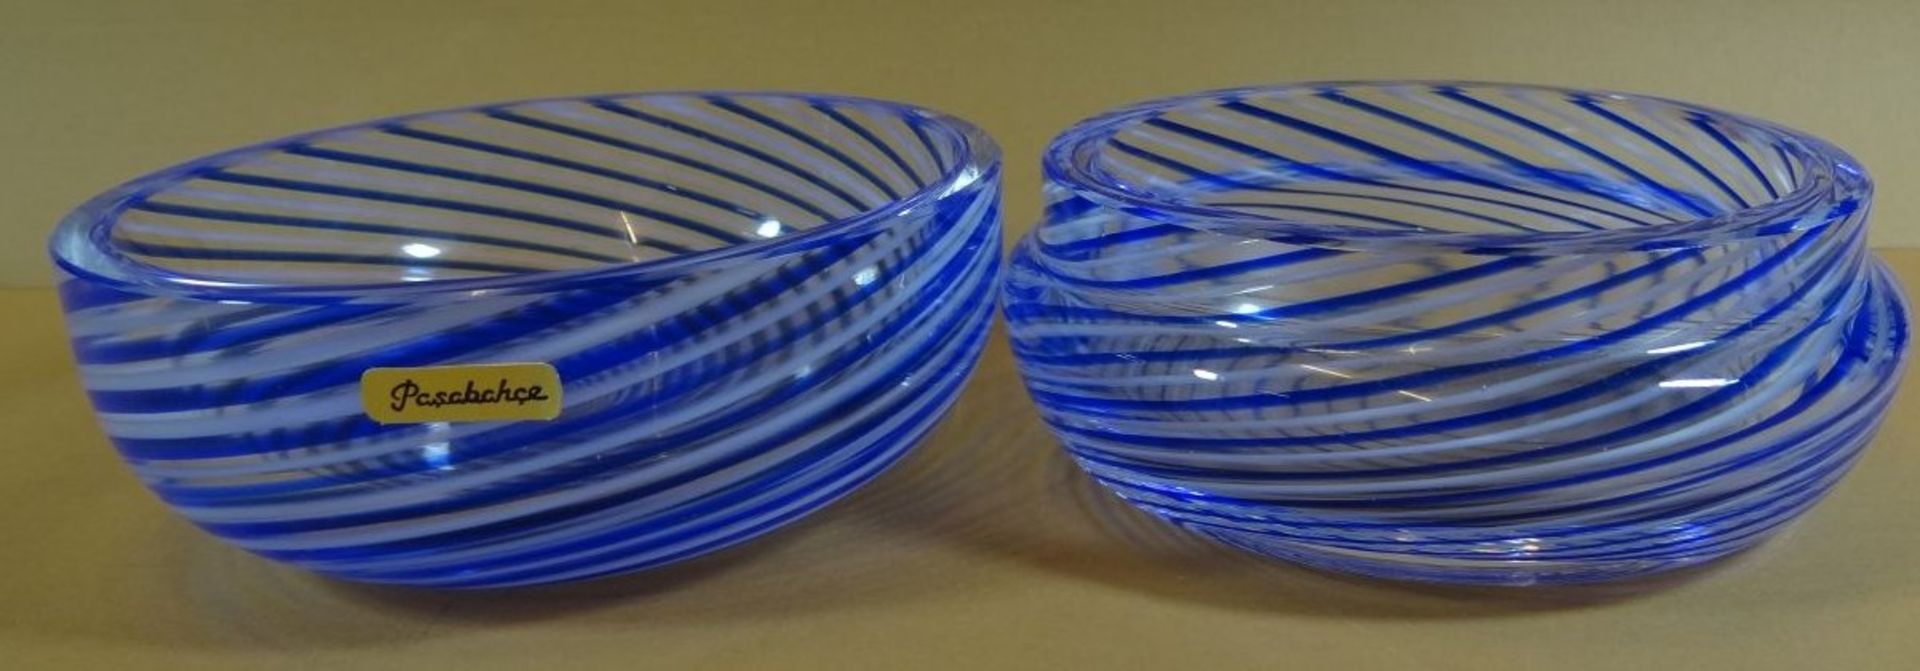 Deckeldose "Pasabahce" Spiralglas, H-8 cm, D-12 cm - Bild 3 aus 5